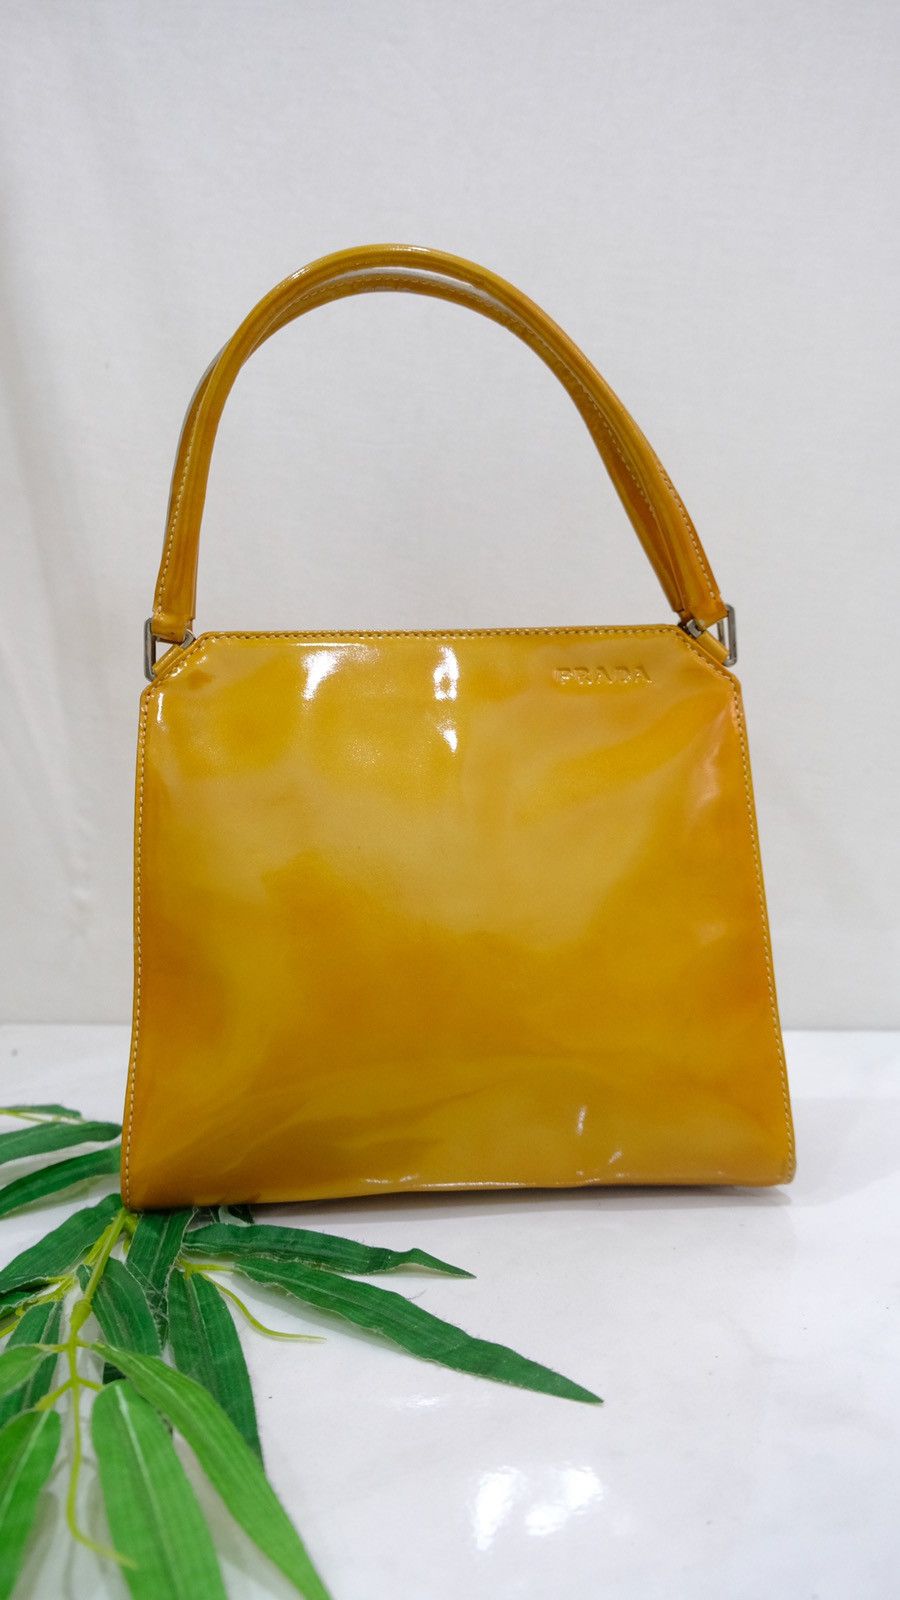 Authentic Prada handbag yellow pattern leather - 2